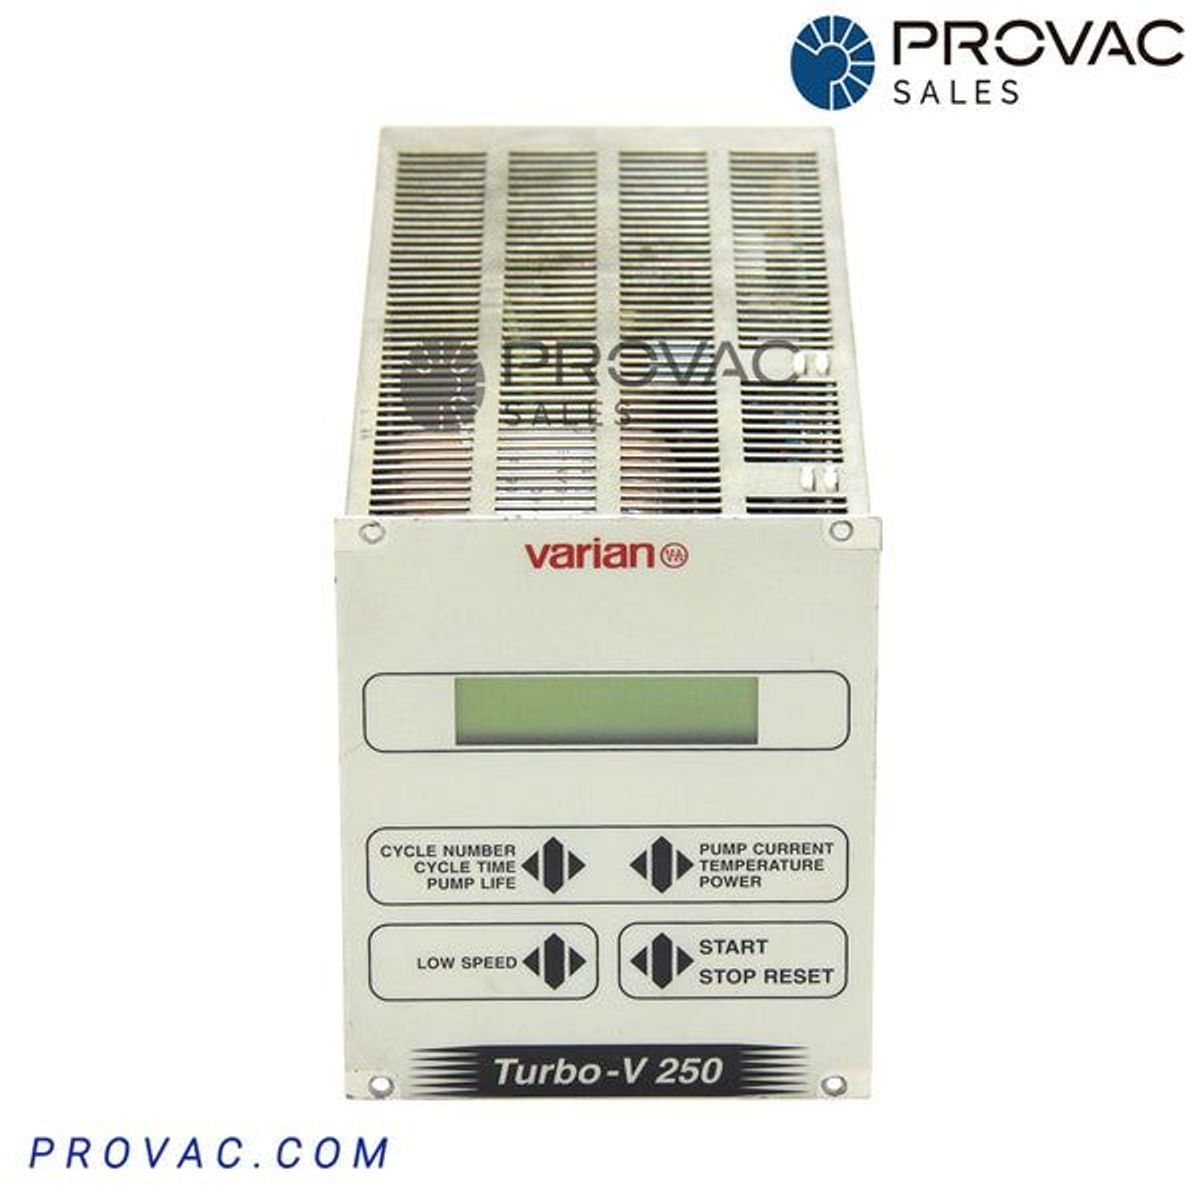 Varian TV-250 1/4 rack Turbo Pump Controller, Rebuilt Image 1